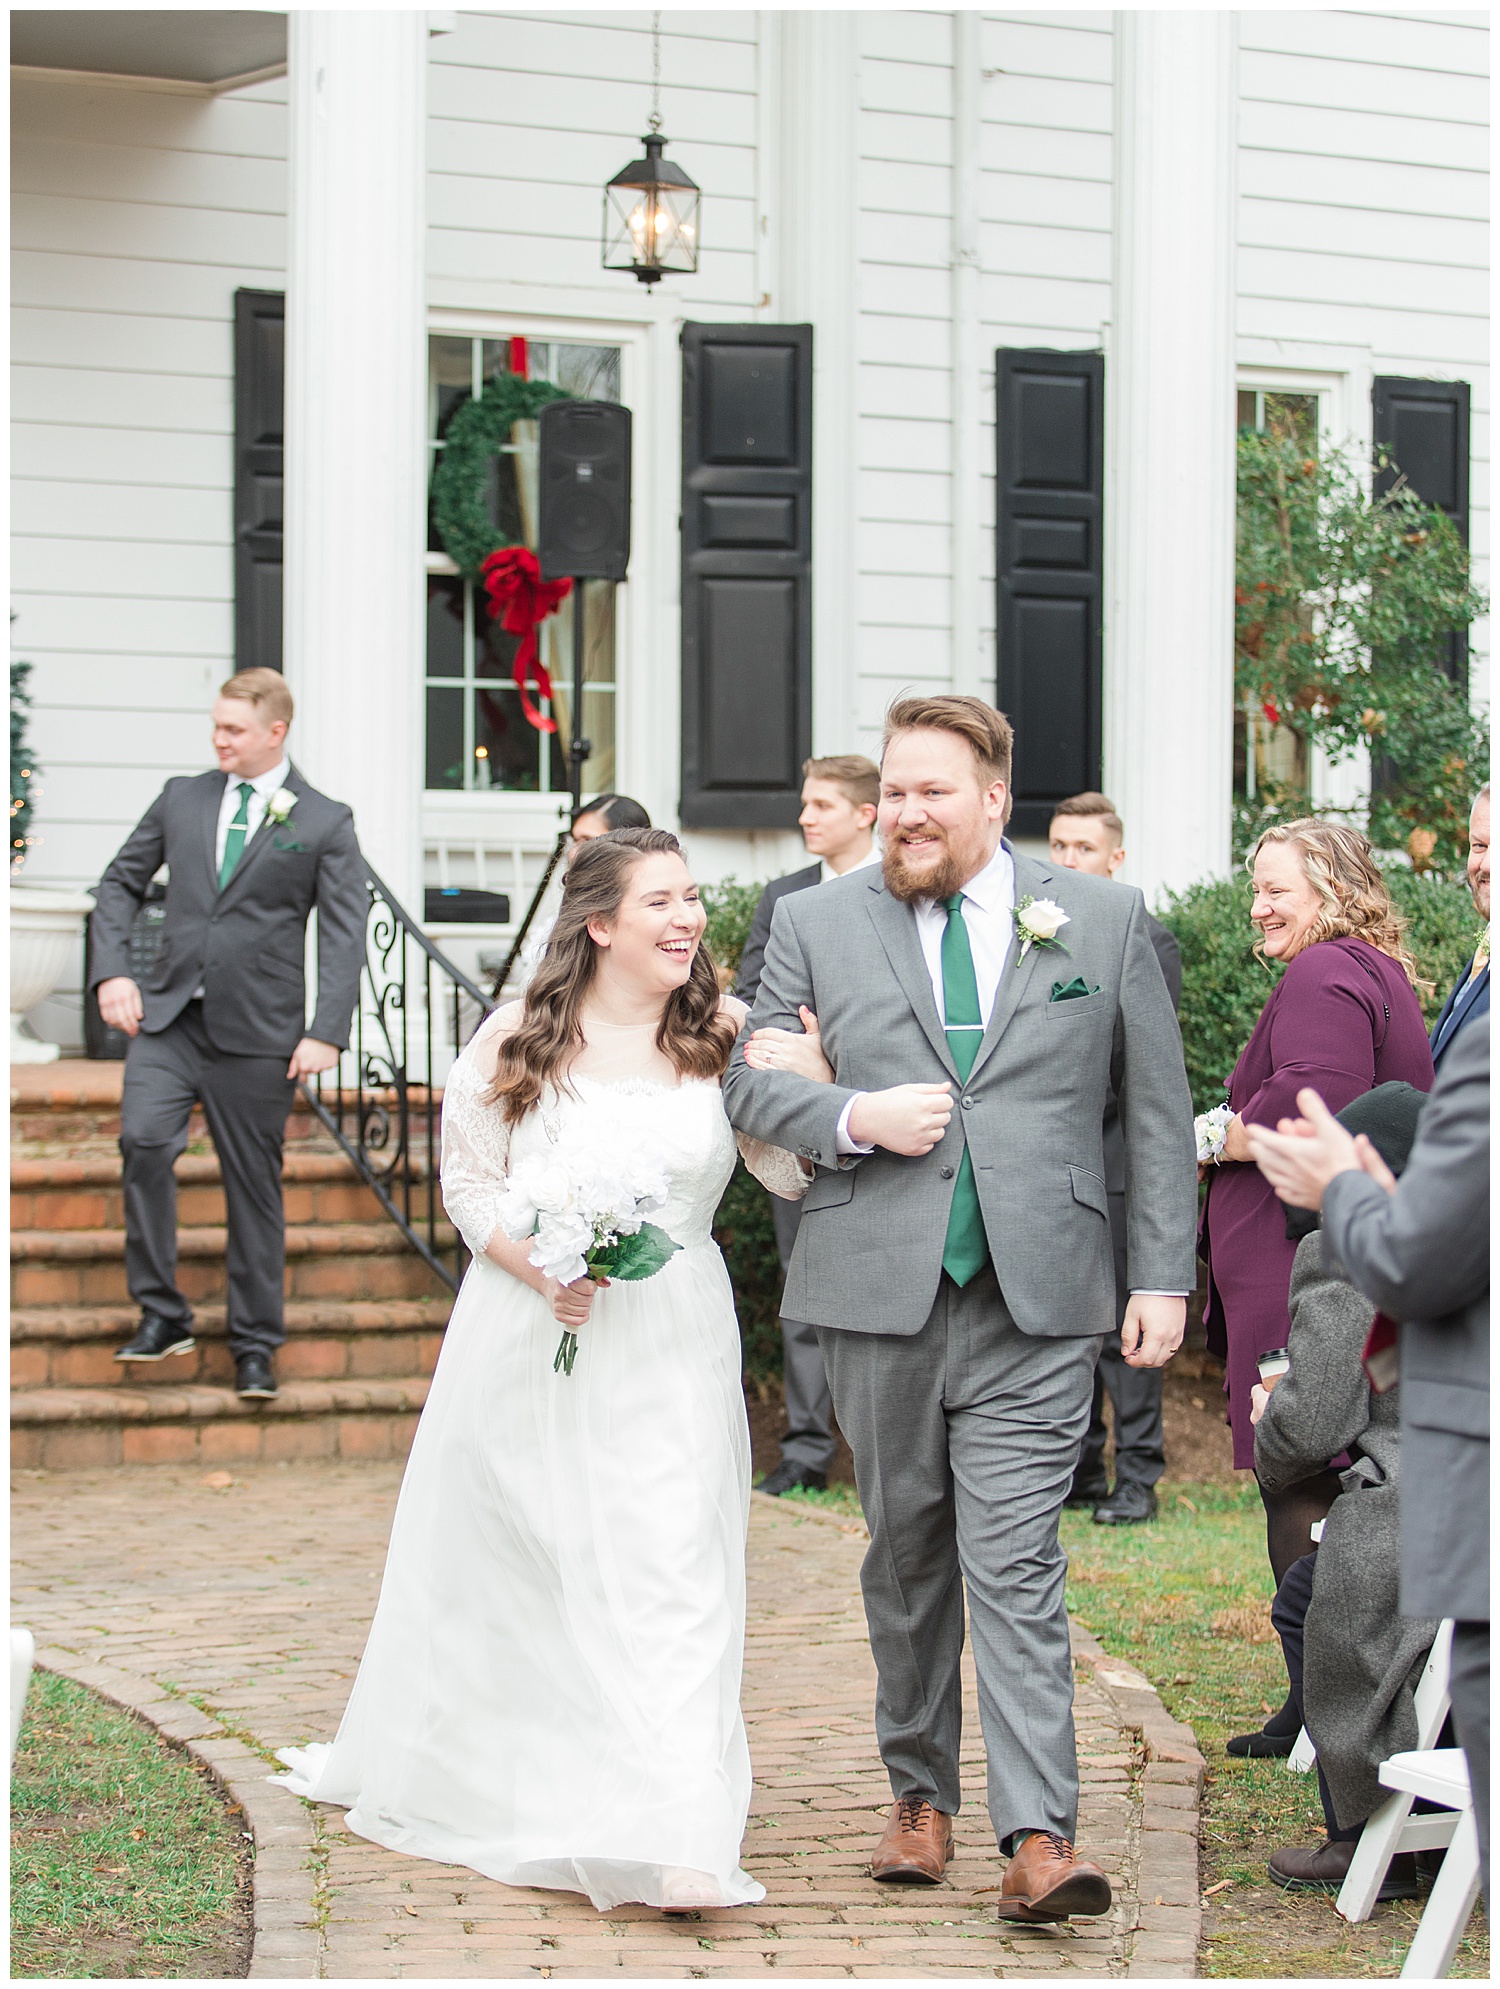 Virginia Cliffe Inn Wedding at Christmastime - Virginia Wedding Photographer